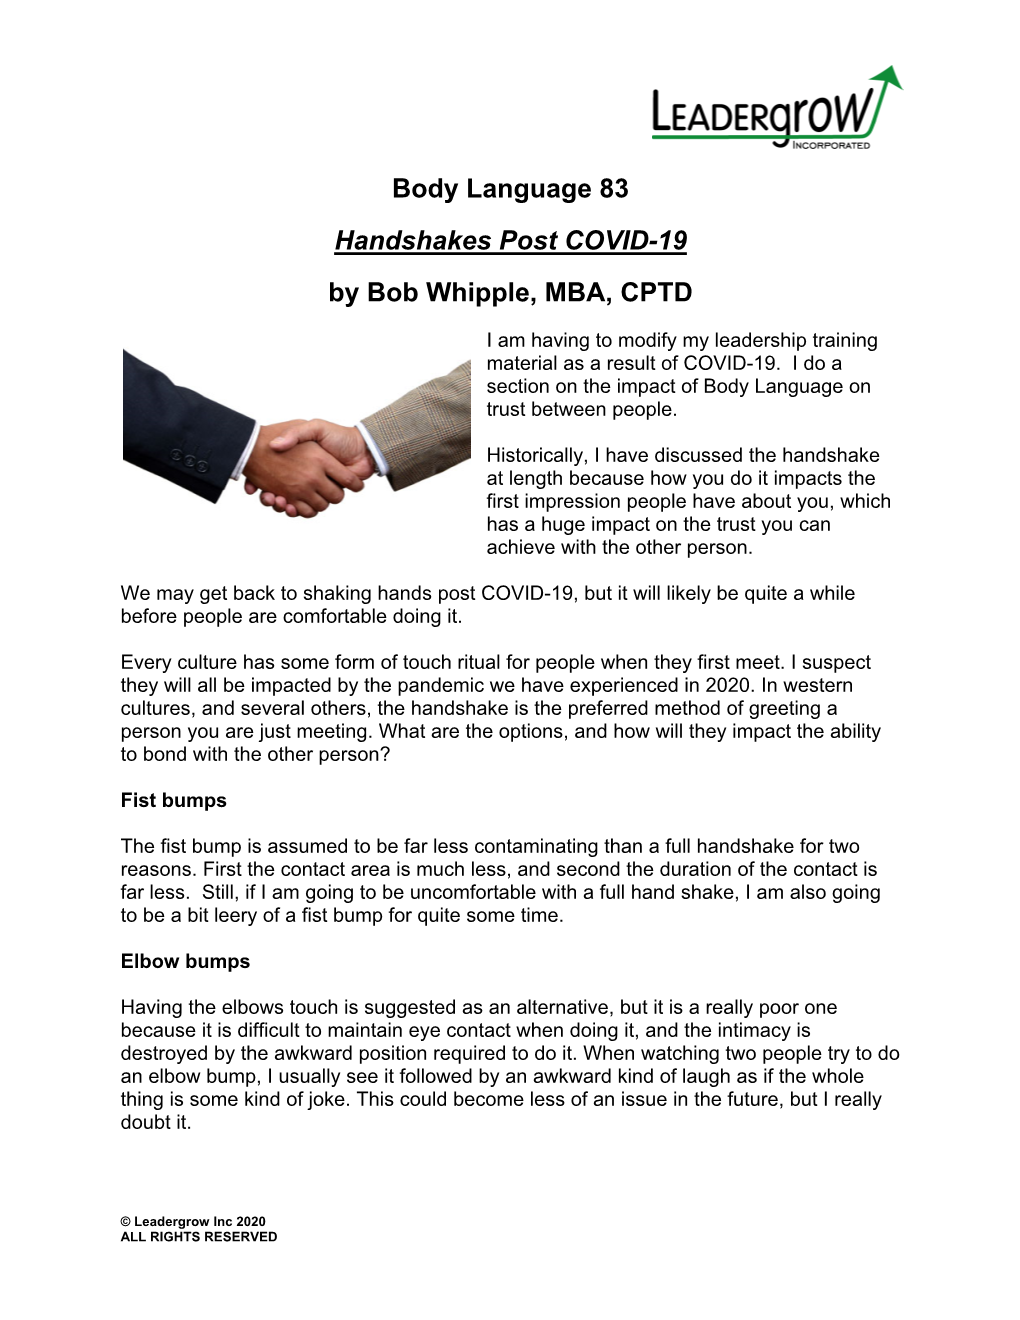 Body Language 83 Handshakes Post COVID-19 by Bob Whipple, MBA